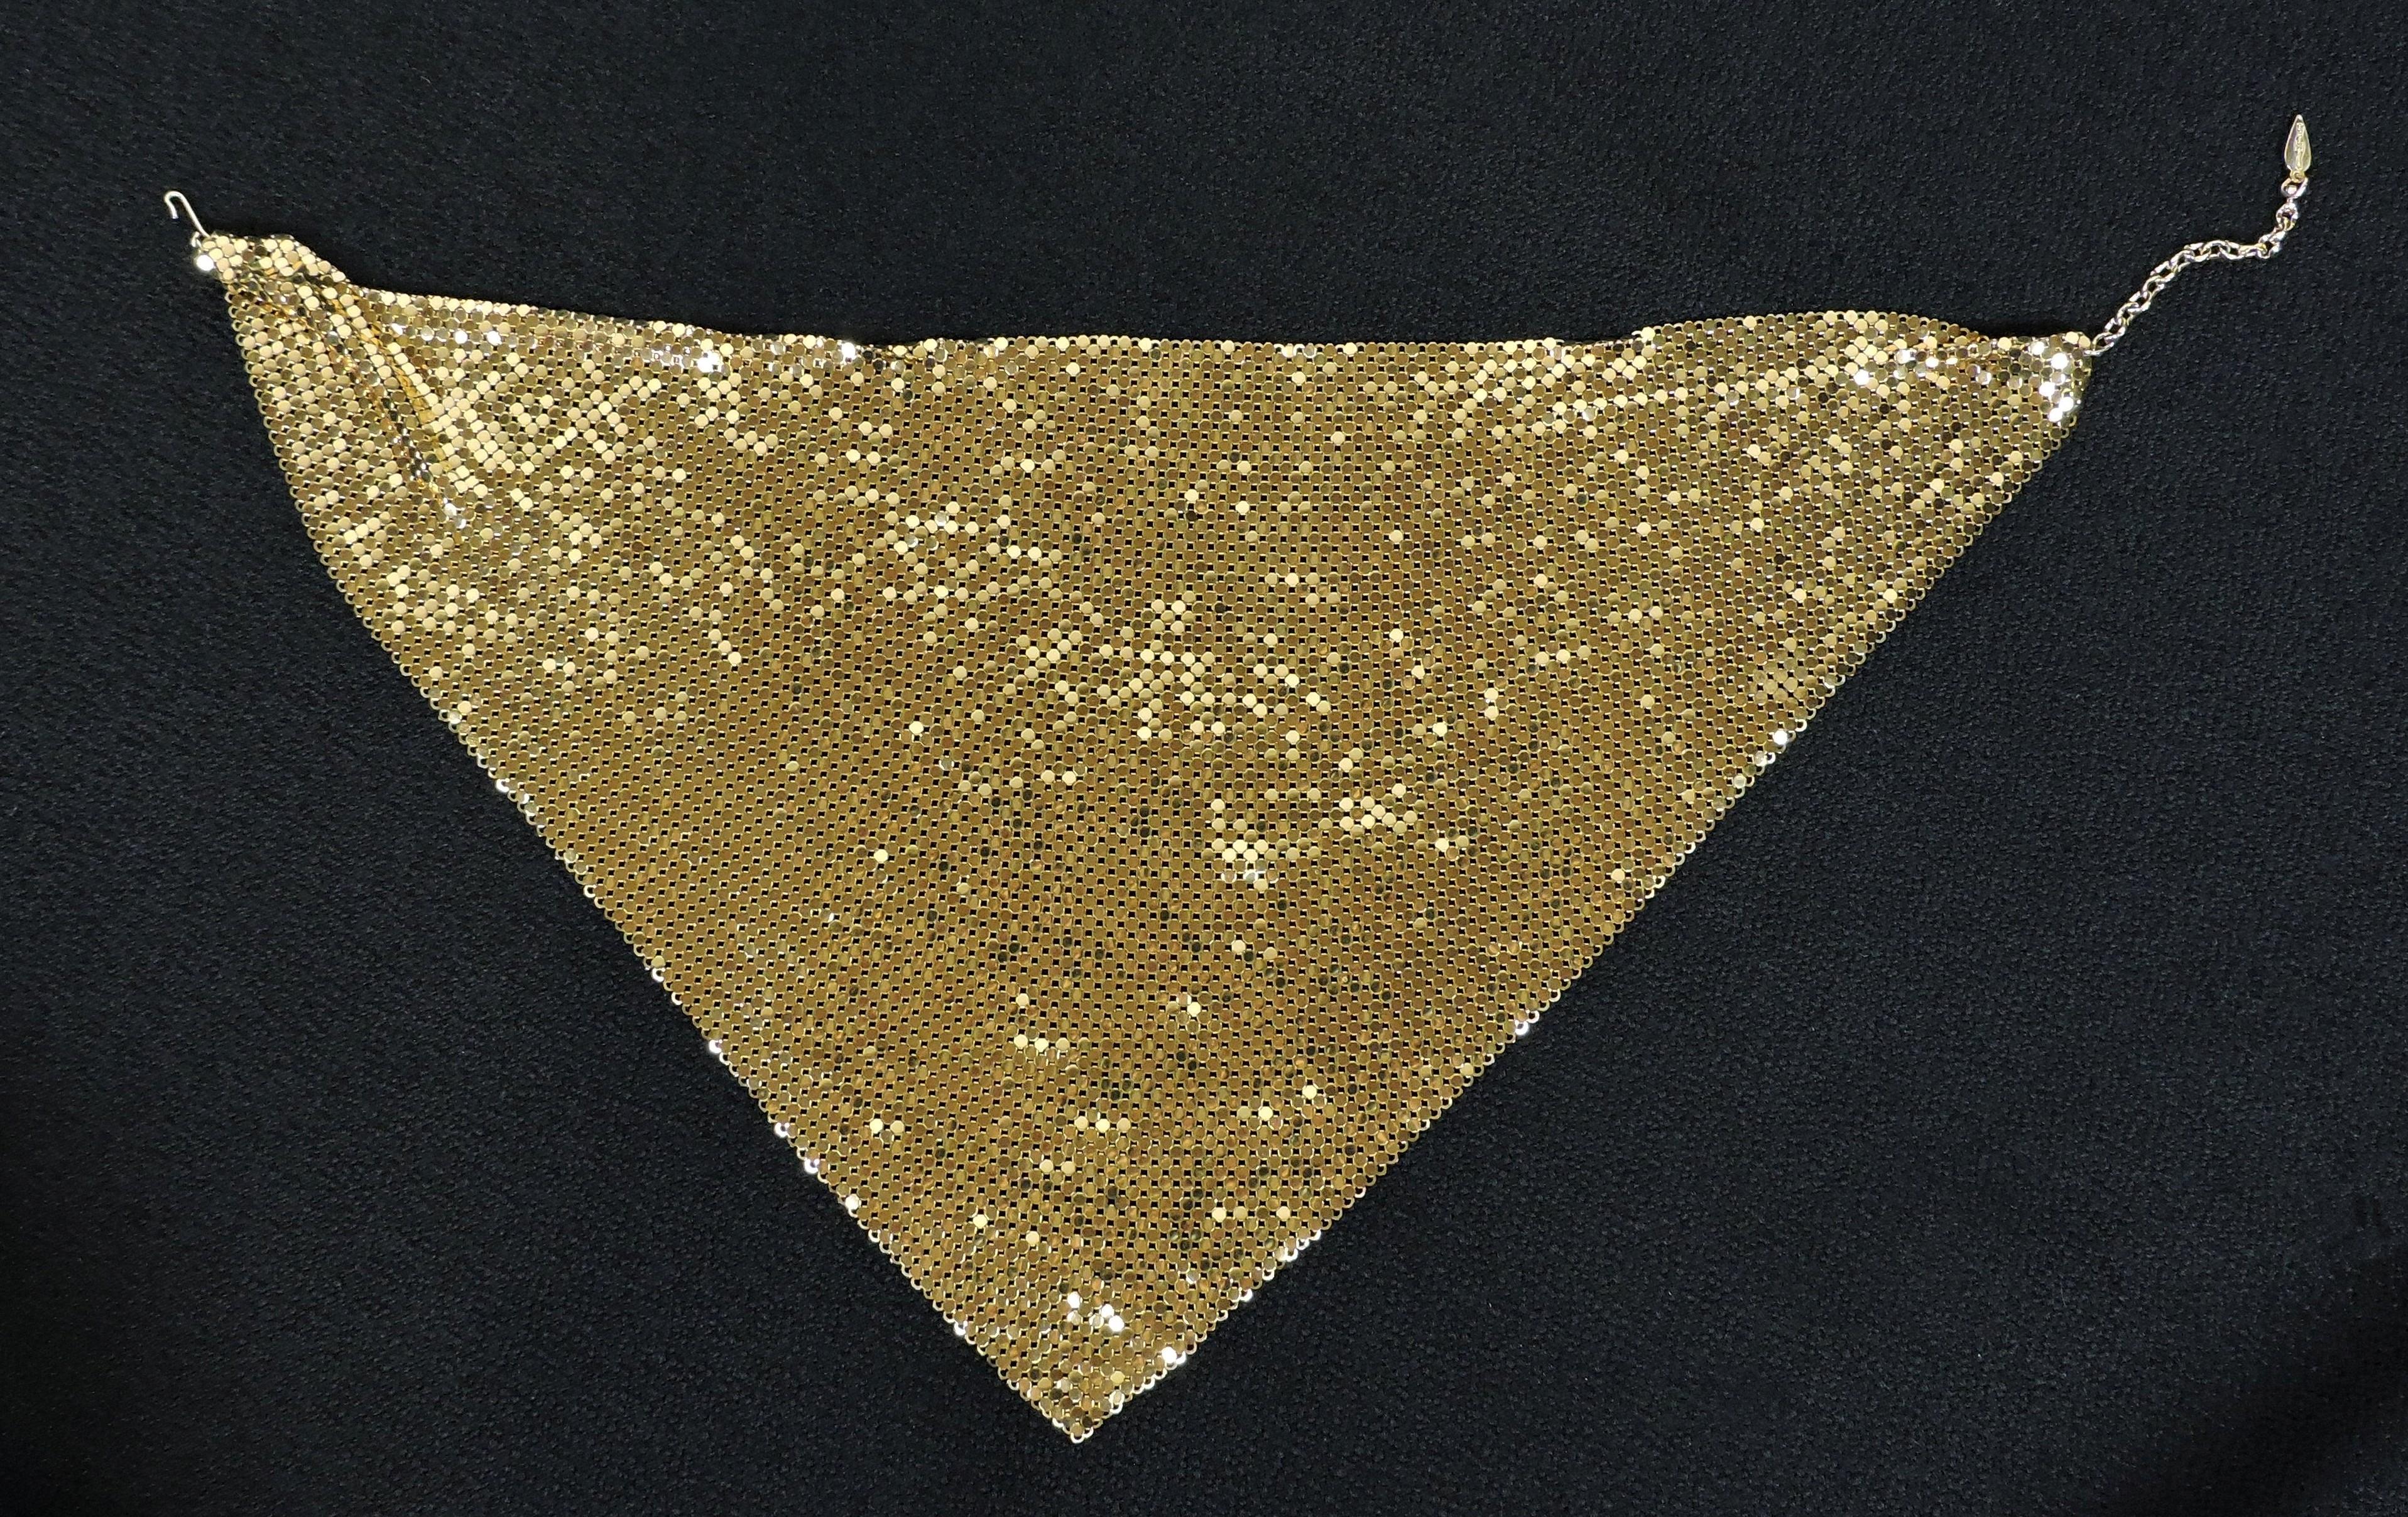 Plated Whiting & Davis Company Mid Century Modern Gold Mesh Bib Necklace Choker